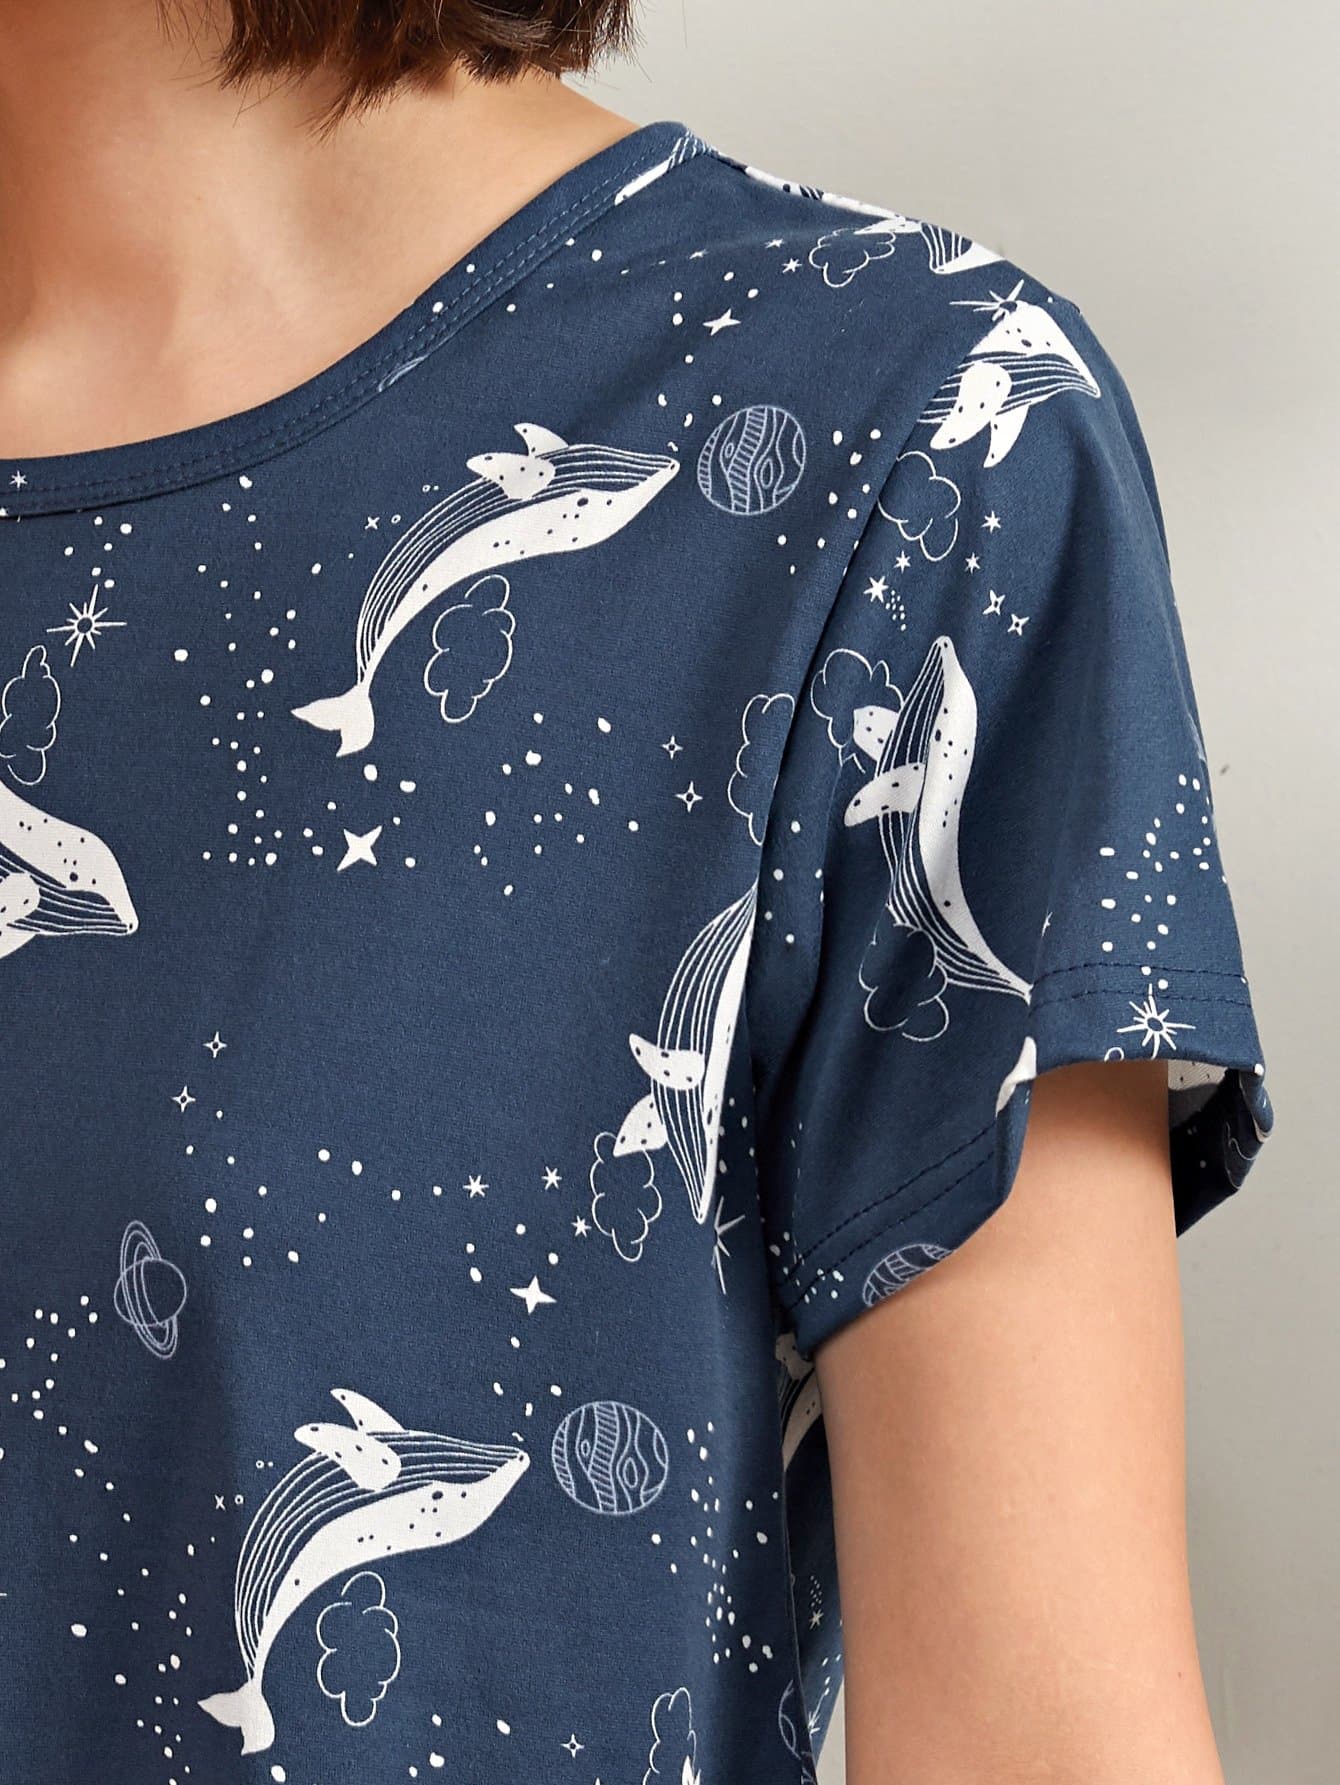 Navy Blue Round Neck Cartoon Dolphin Print Pyjama Sleepwear Set With Eye Cover